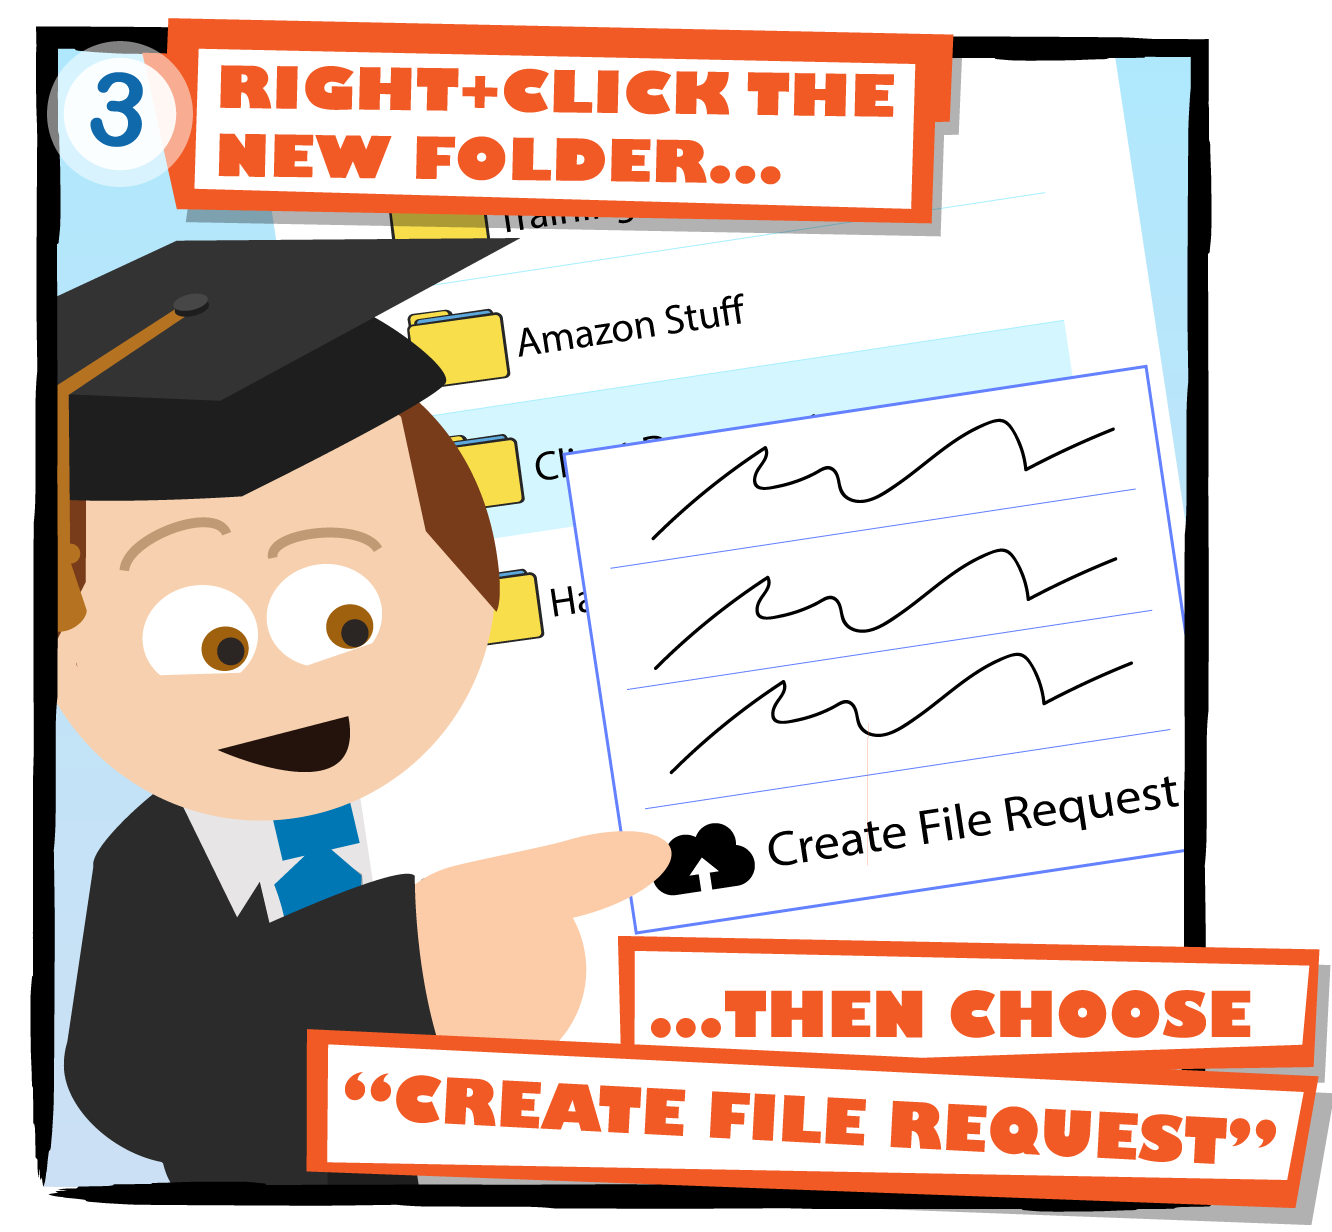 Select 'Create File Request'